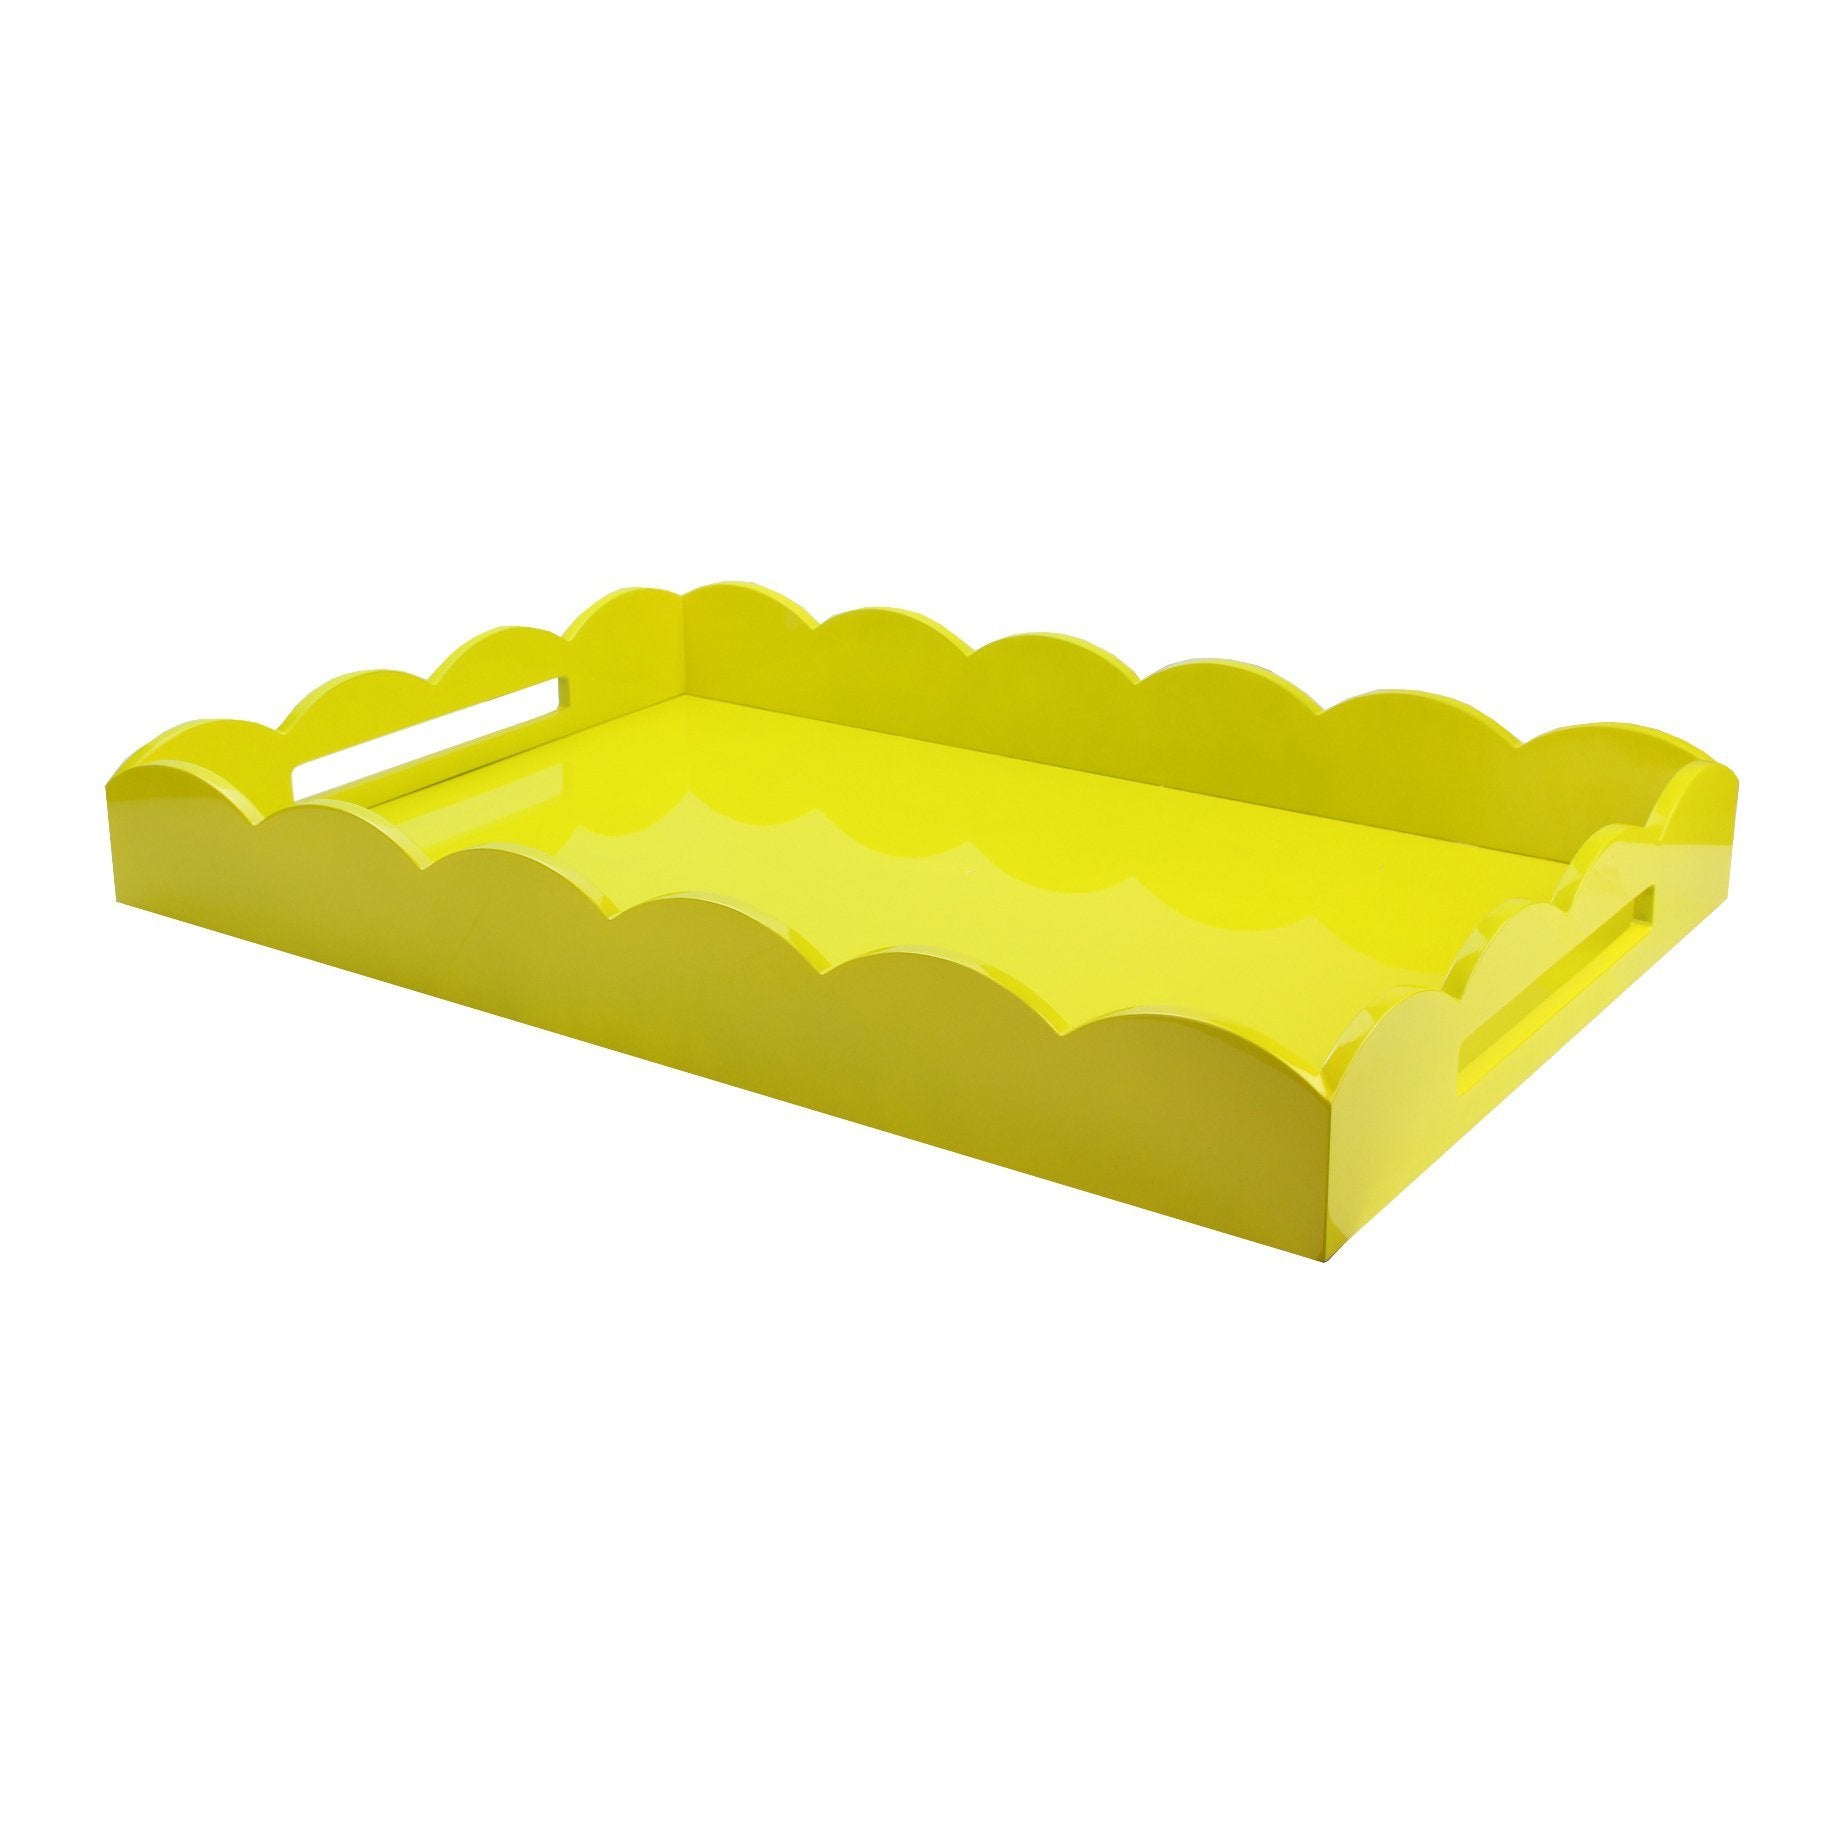 Yellow Large Lacquered Scallop Ottoman Tray - Addison Ross Ltd UK